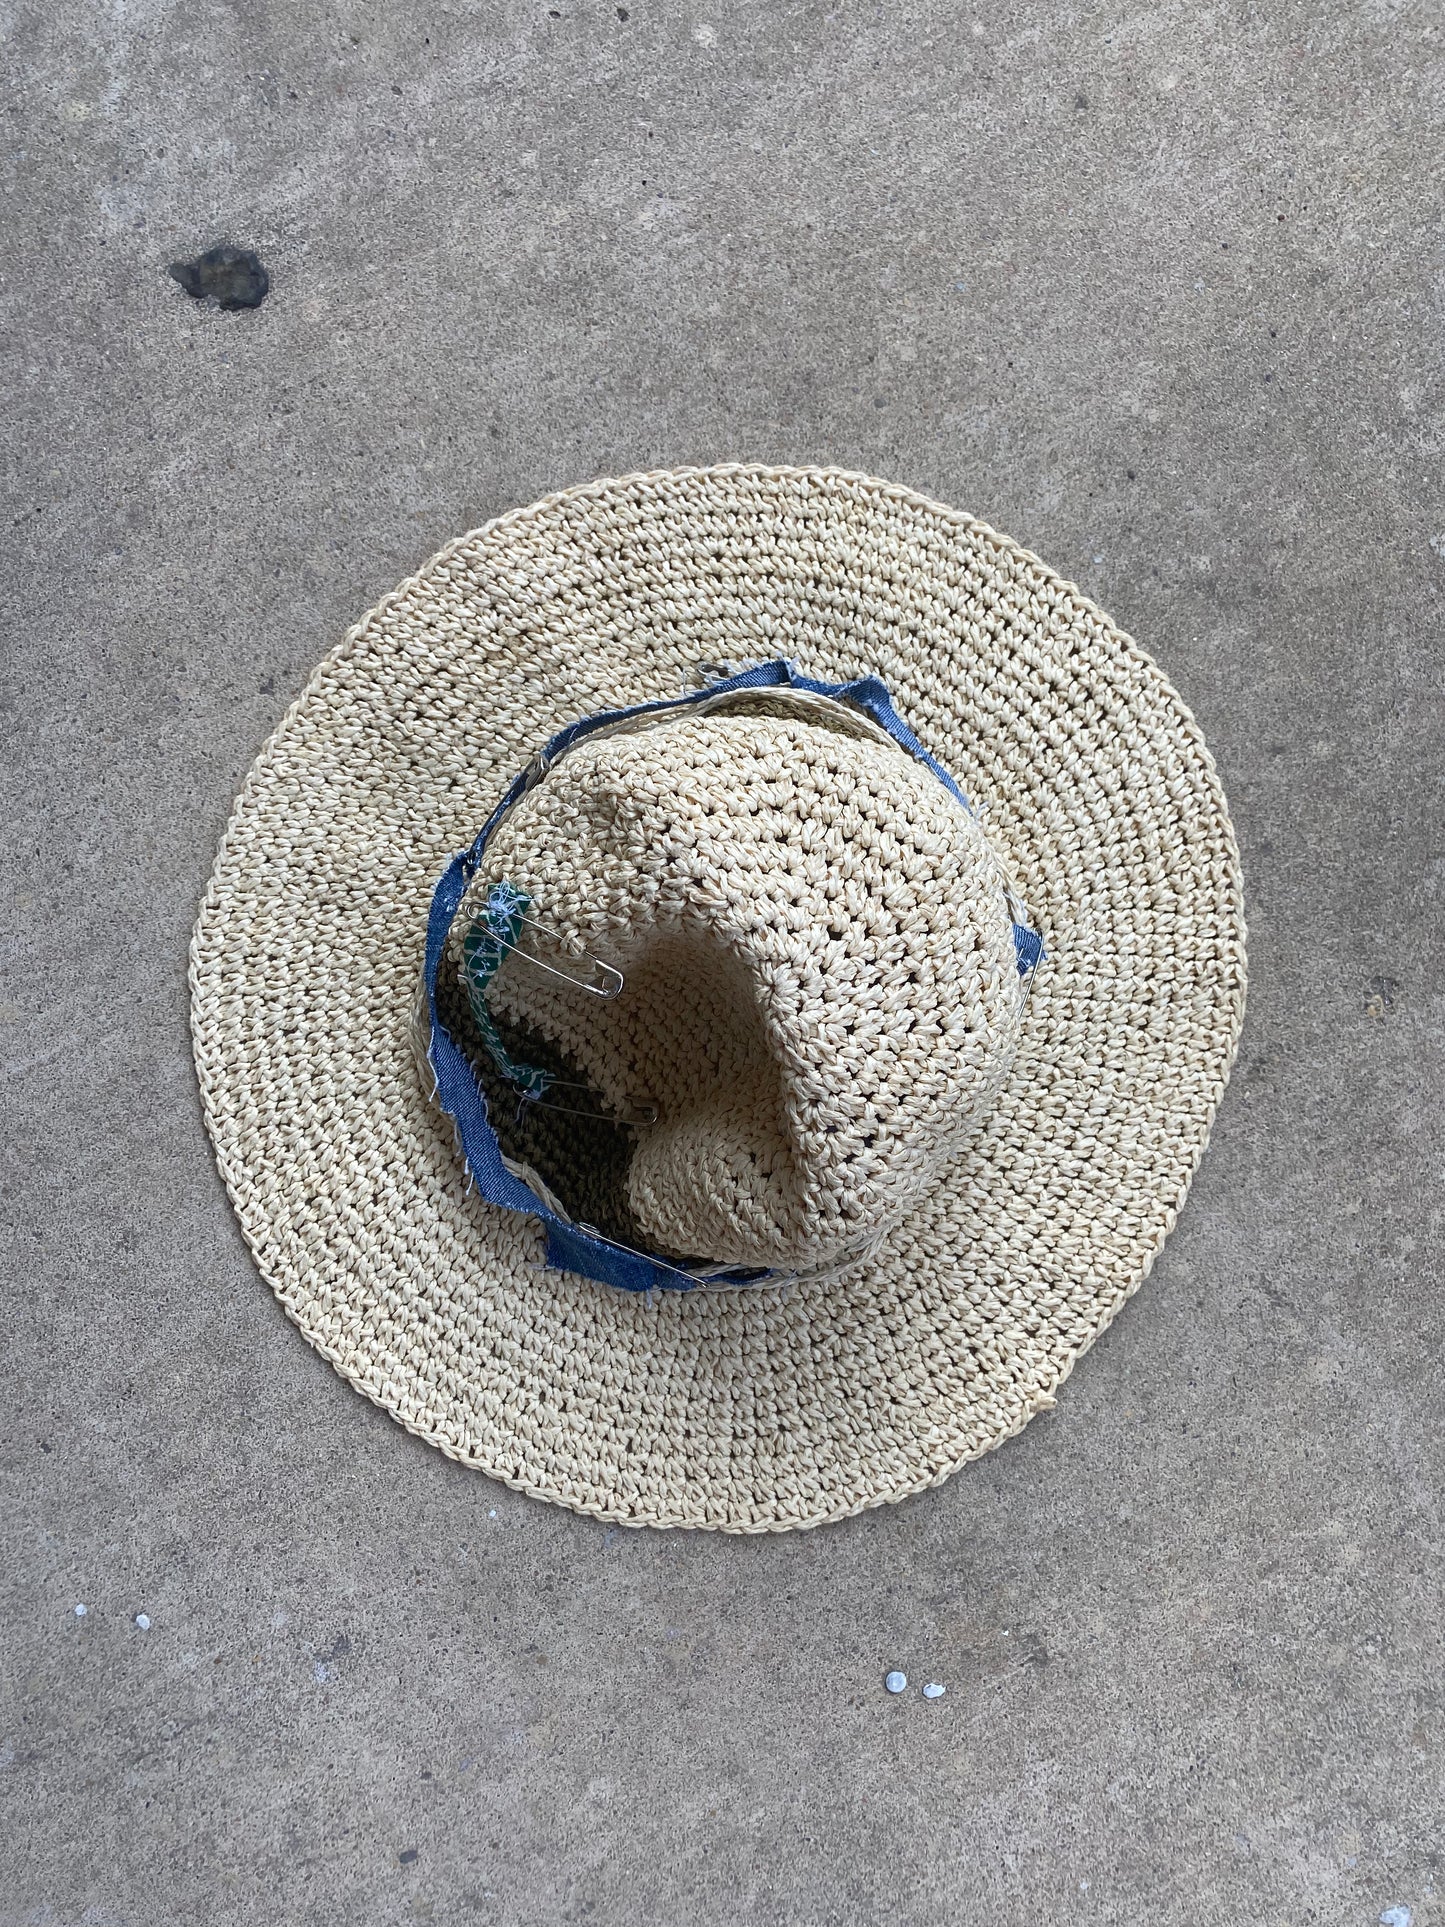 Custom Gap Straw Gardening Hat - Brimm Archive Wardrobe Research